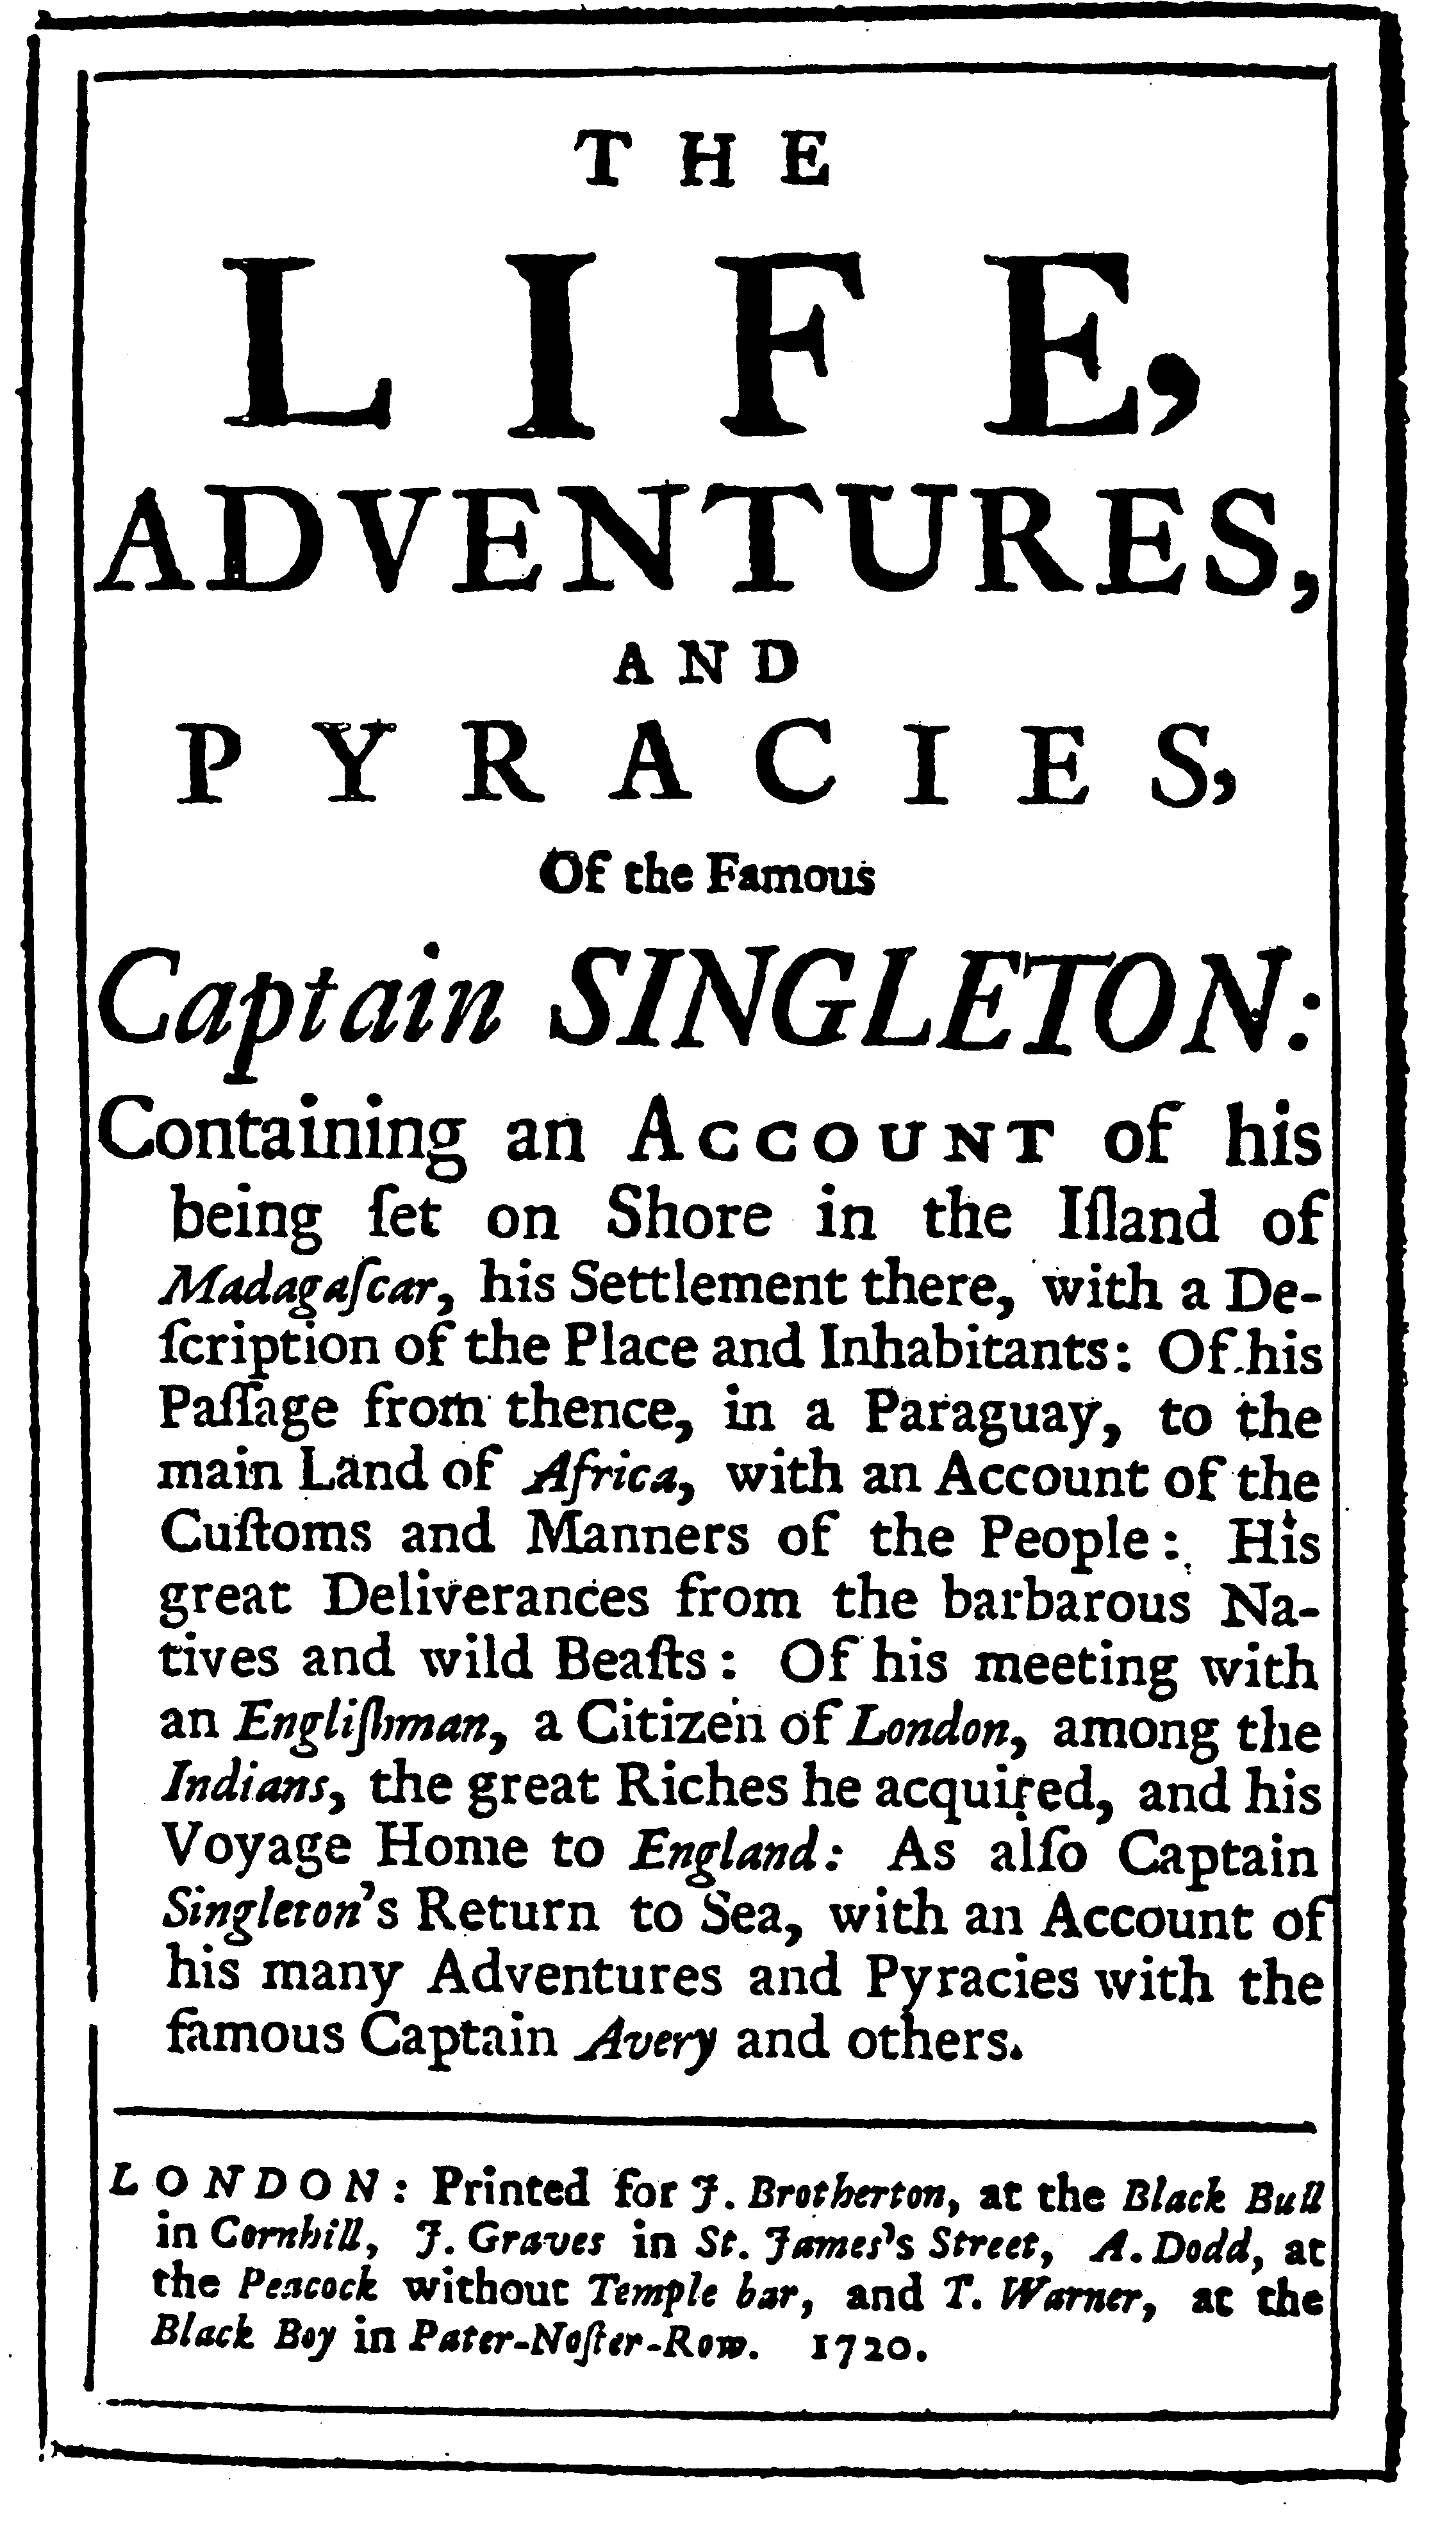 [Daniel Defoe?] The Life, Adventures, and Pyracies, of the Famous Captain Singleton (London: J. Brotherton/ J. Graves/ A. Dodd/ T. Warner, 1720).